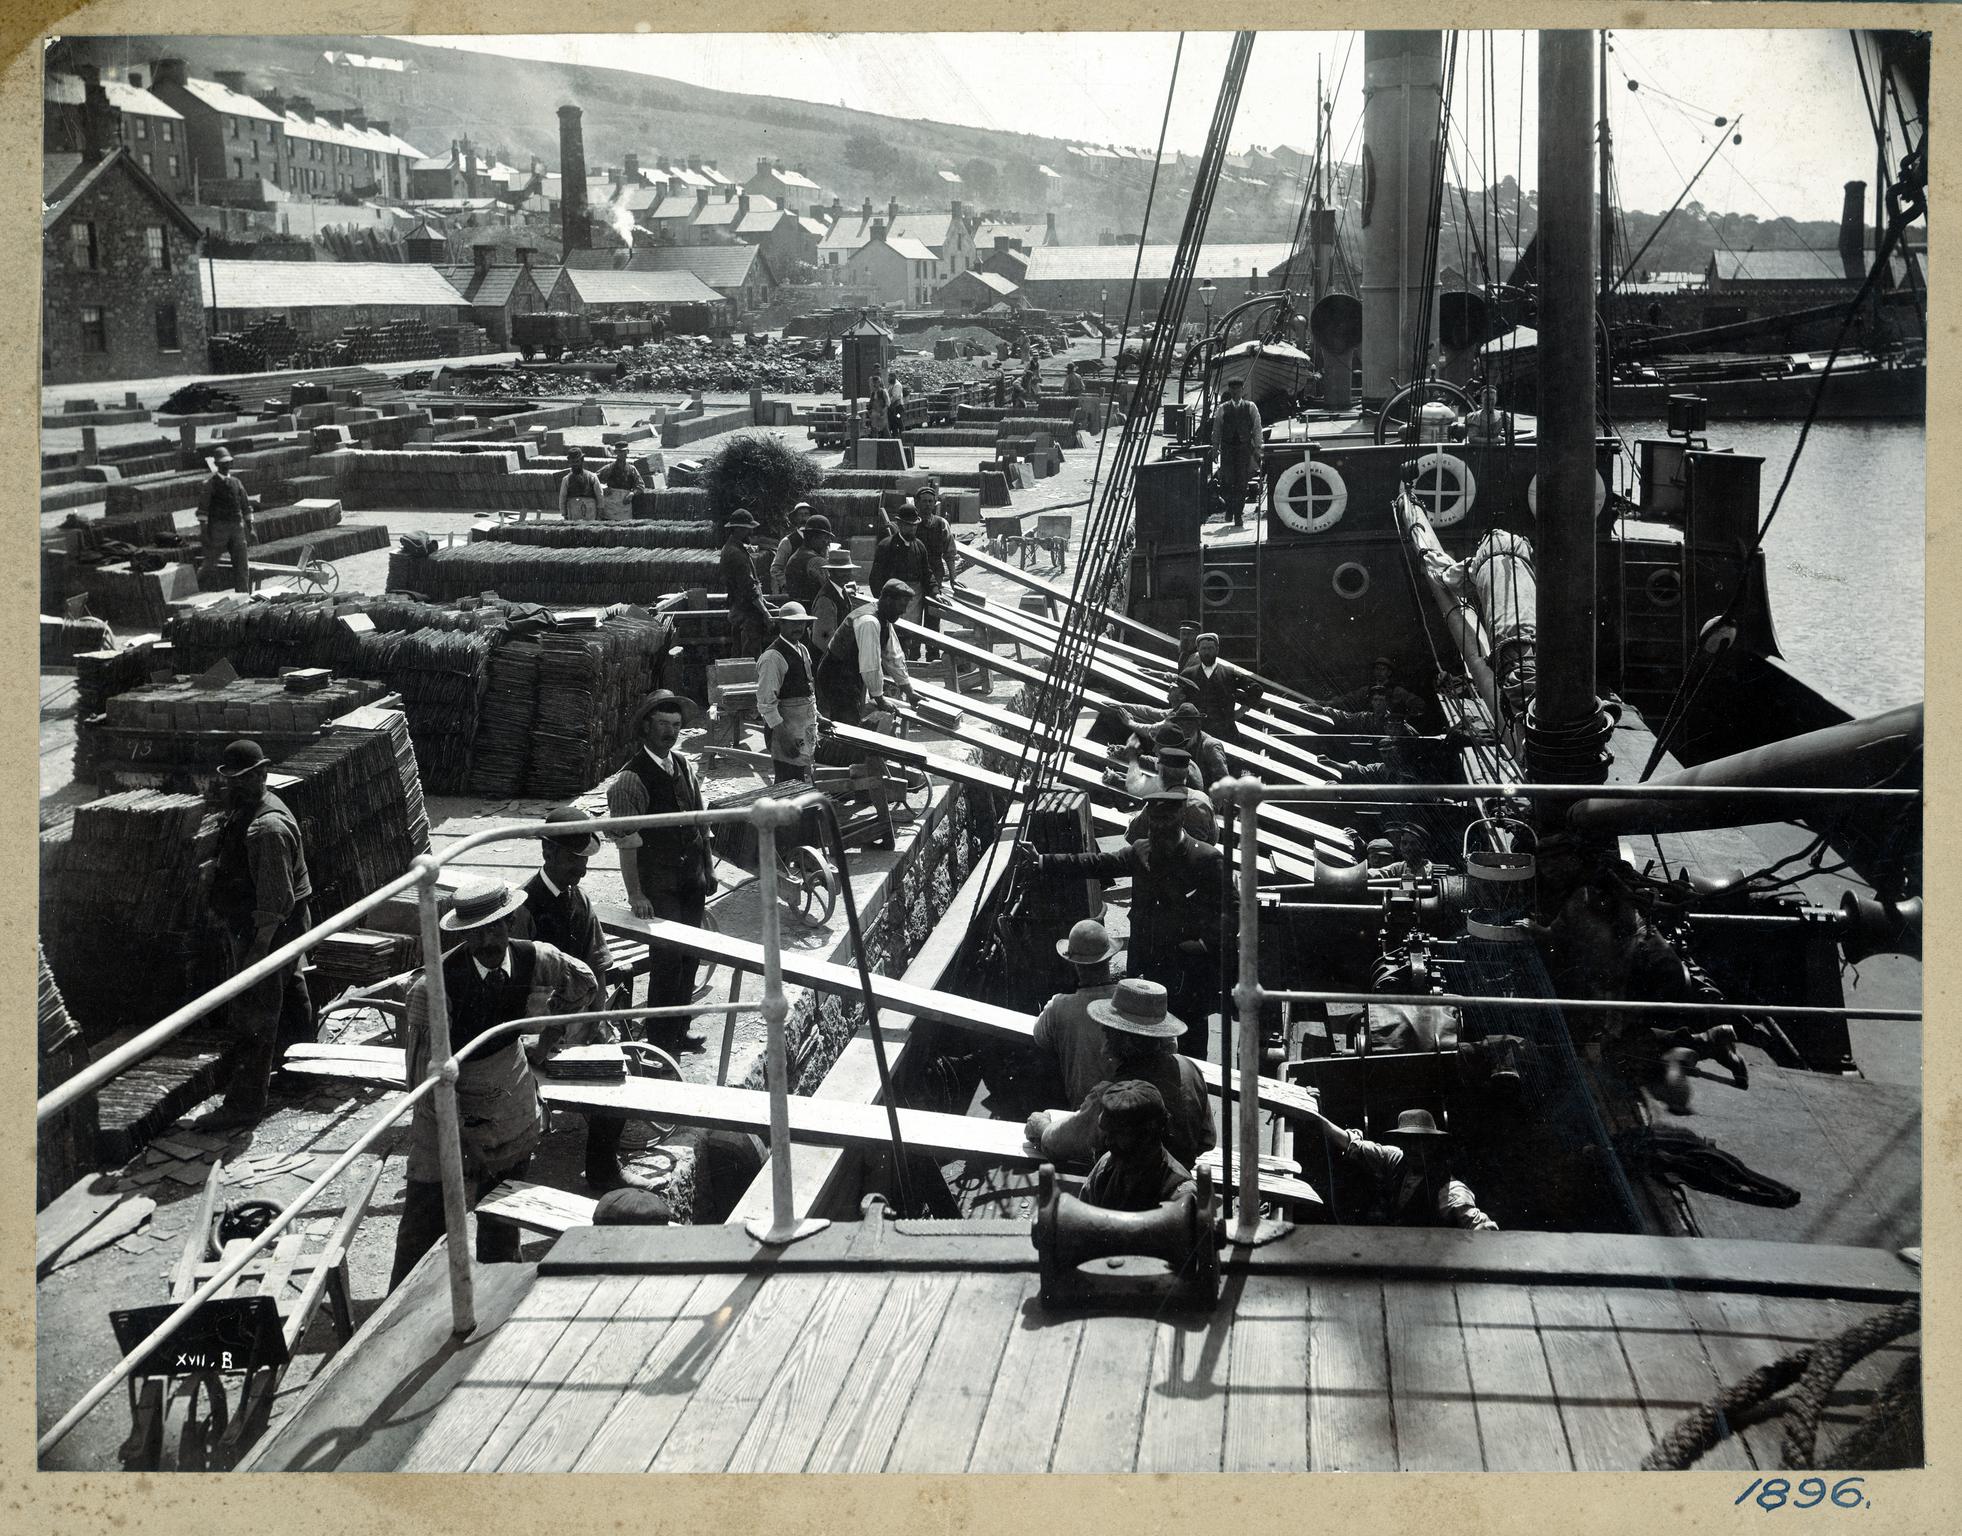 S.S. VAYNOL loading slate, Port Dinorwic, 1896